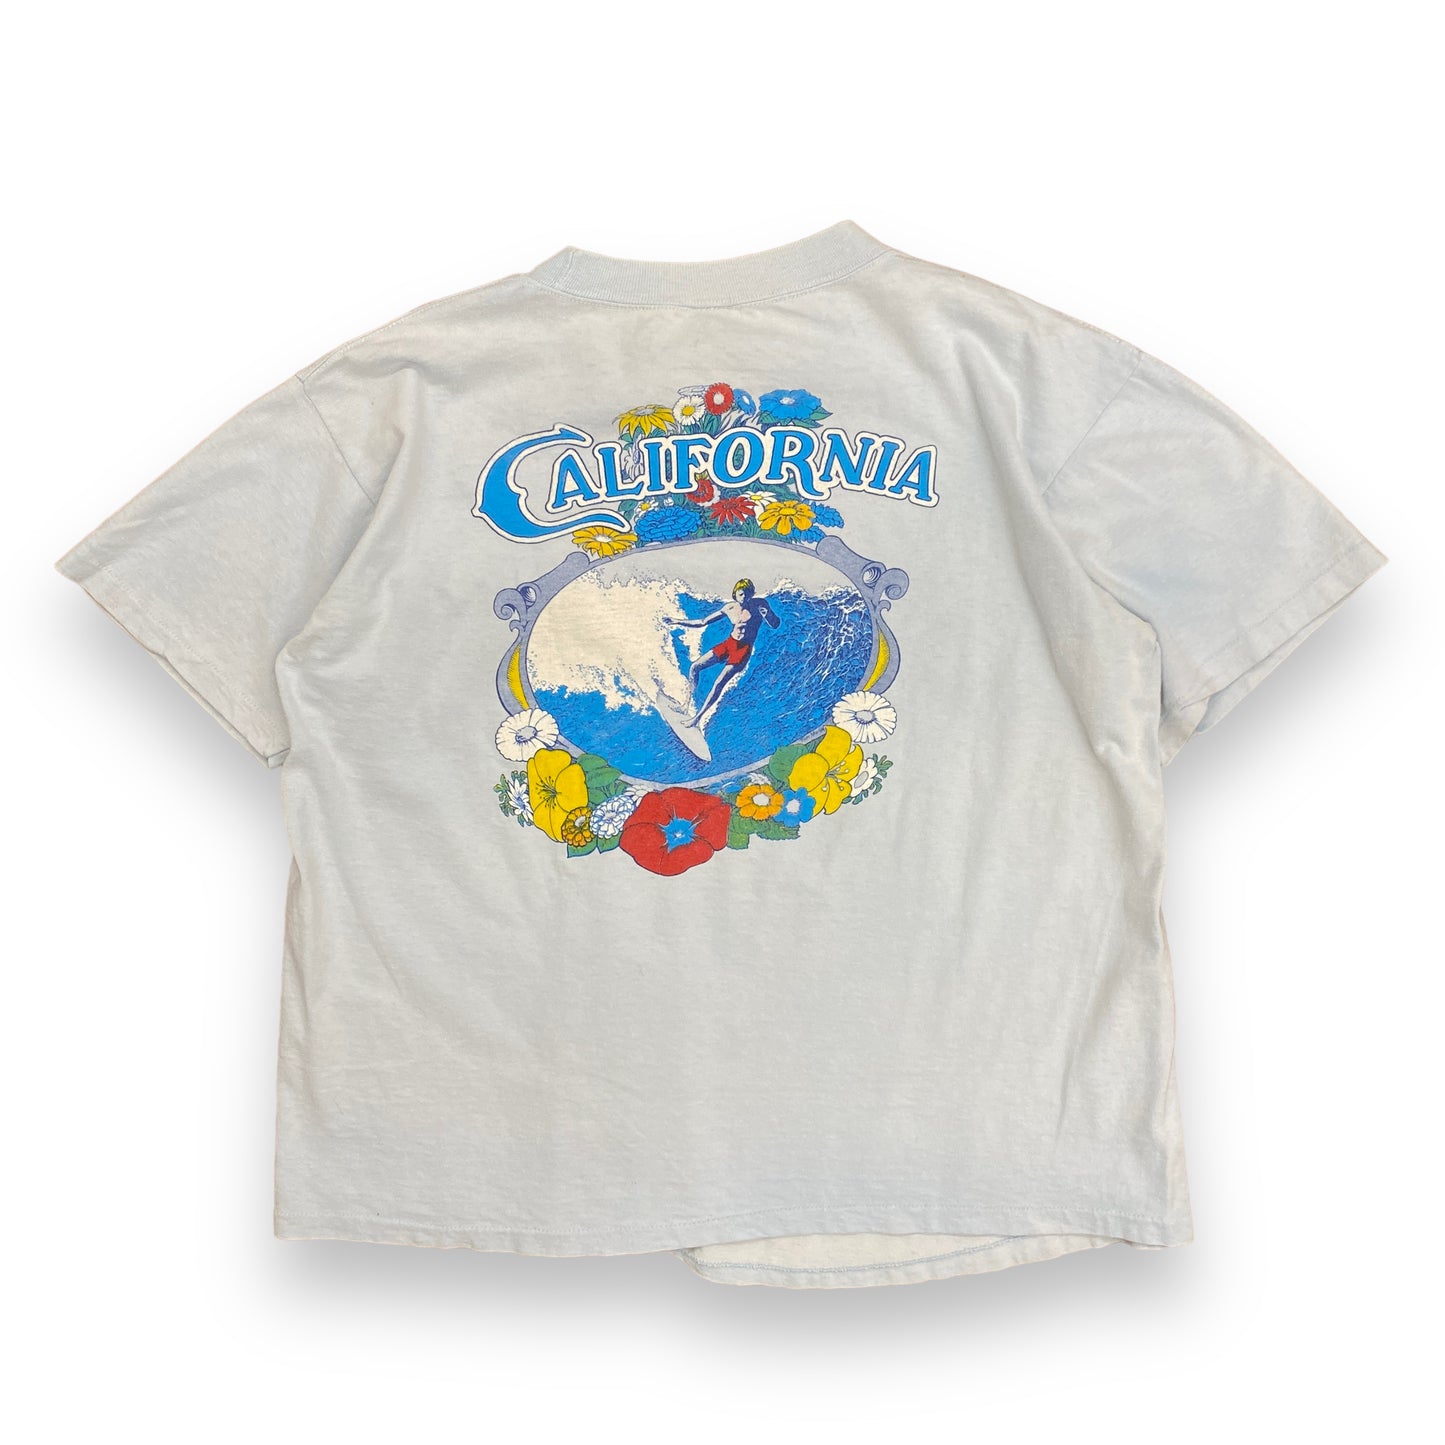 1980s California Surfing Pocket Tee - Size XL